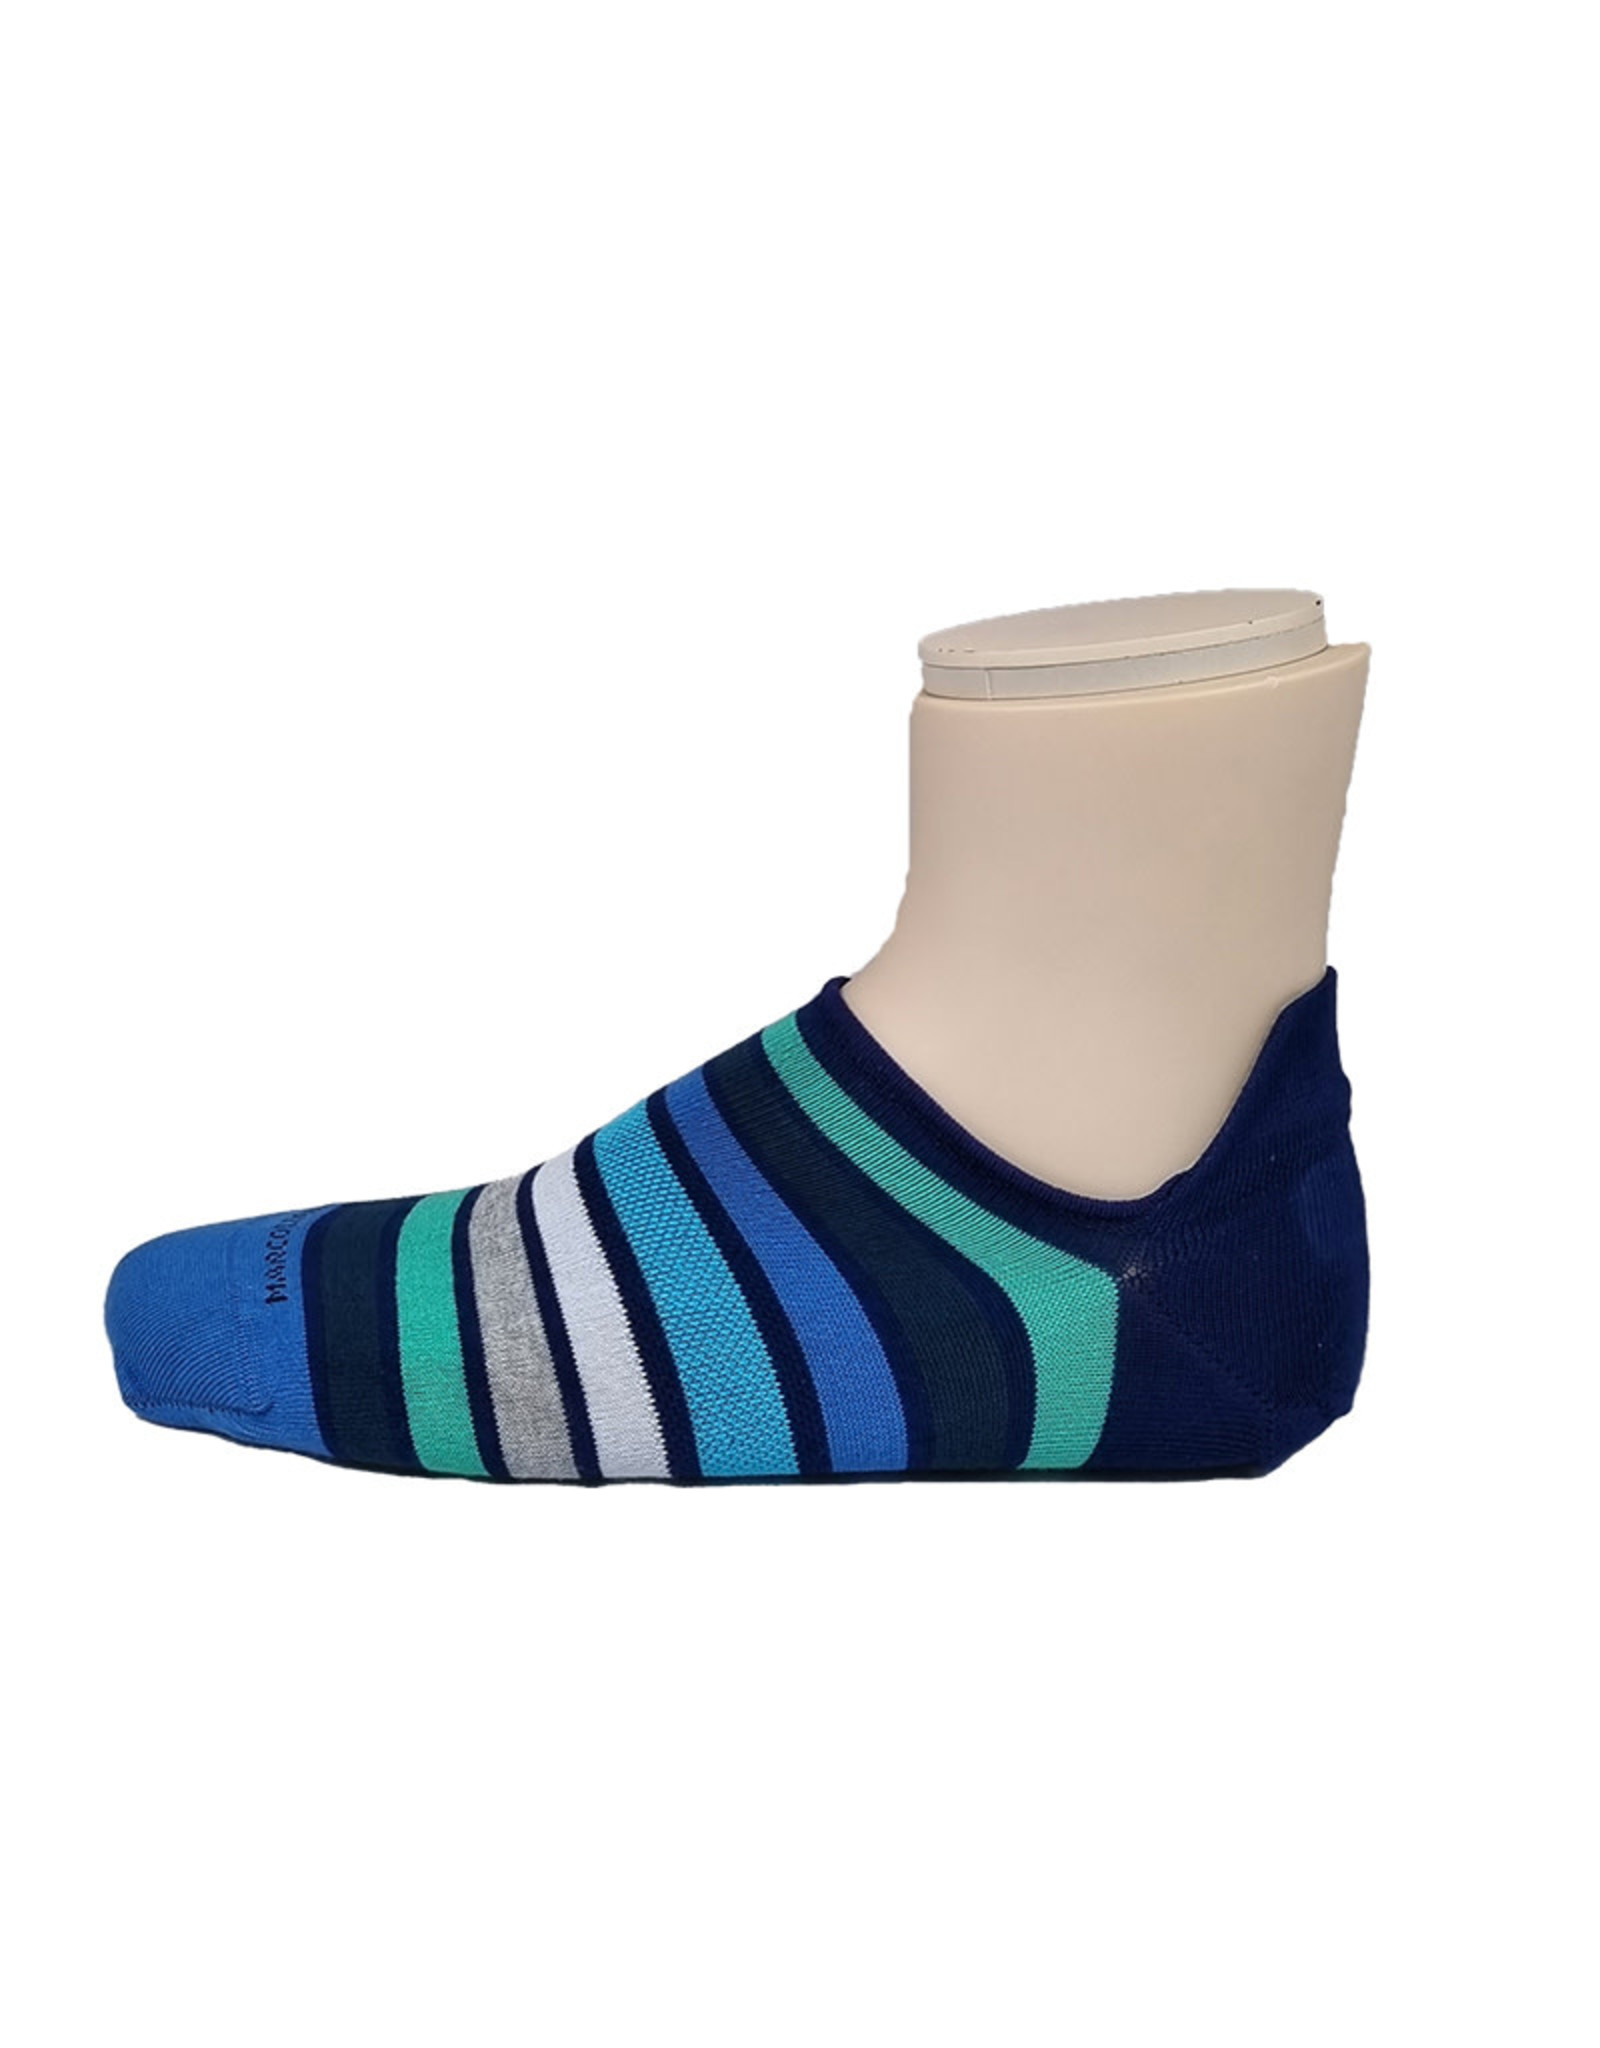 Marcoliani Marcoliani socks navy petrol stripes sneaker